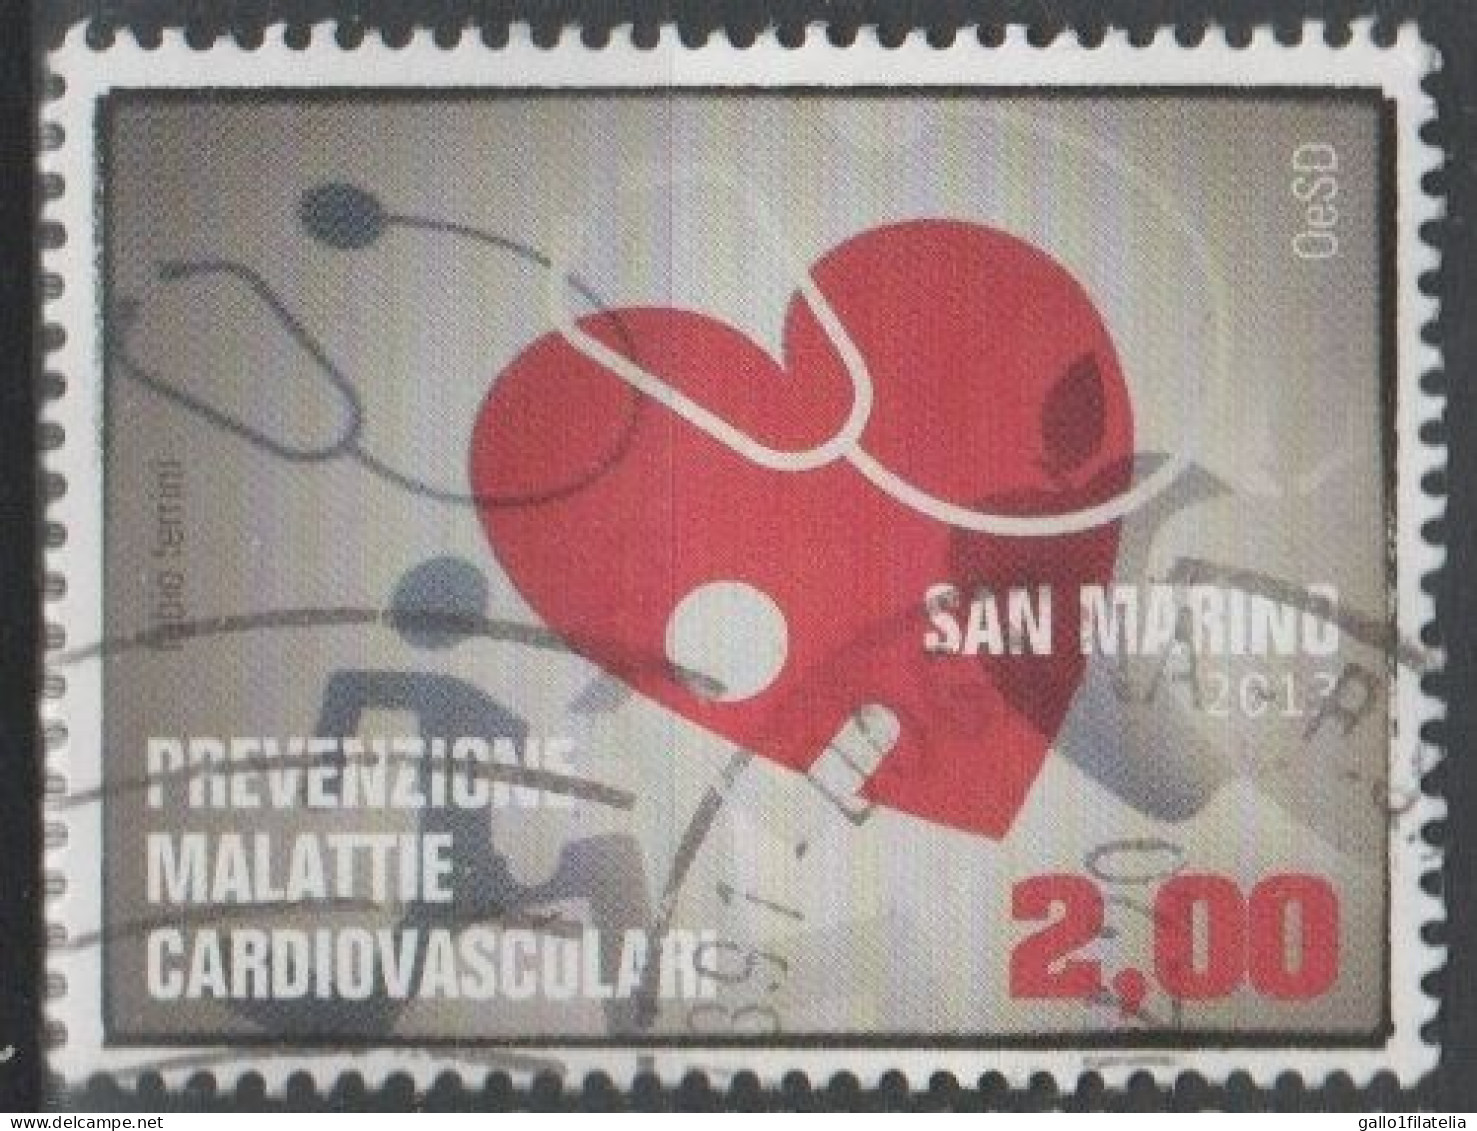 2013 - SAN MARINO - PREVENZIONE MALATTIE CARDIOVASCOLARI / PREVENTION OF CARDIOVASCULAR DISEASES. USATO - Gebraucht